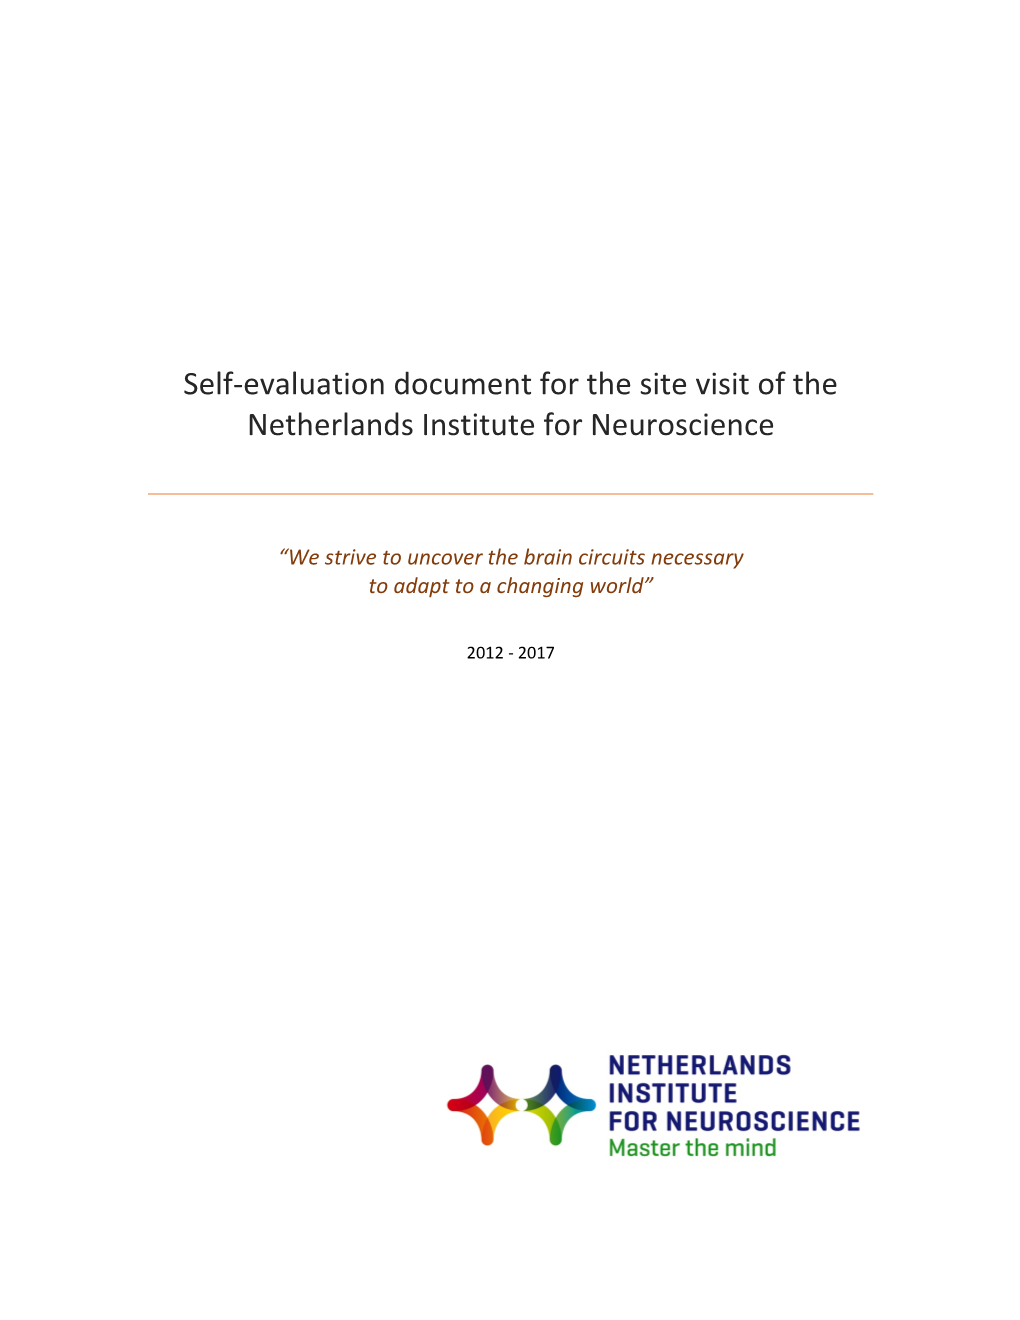 NIN Self-Evaluation